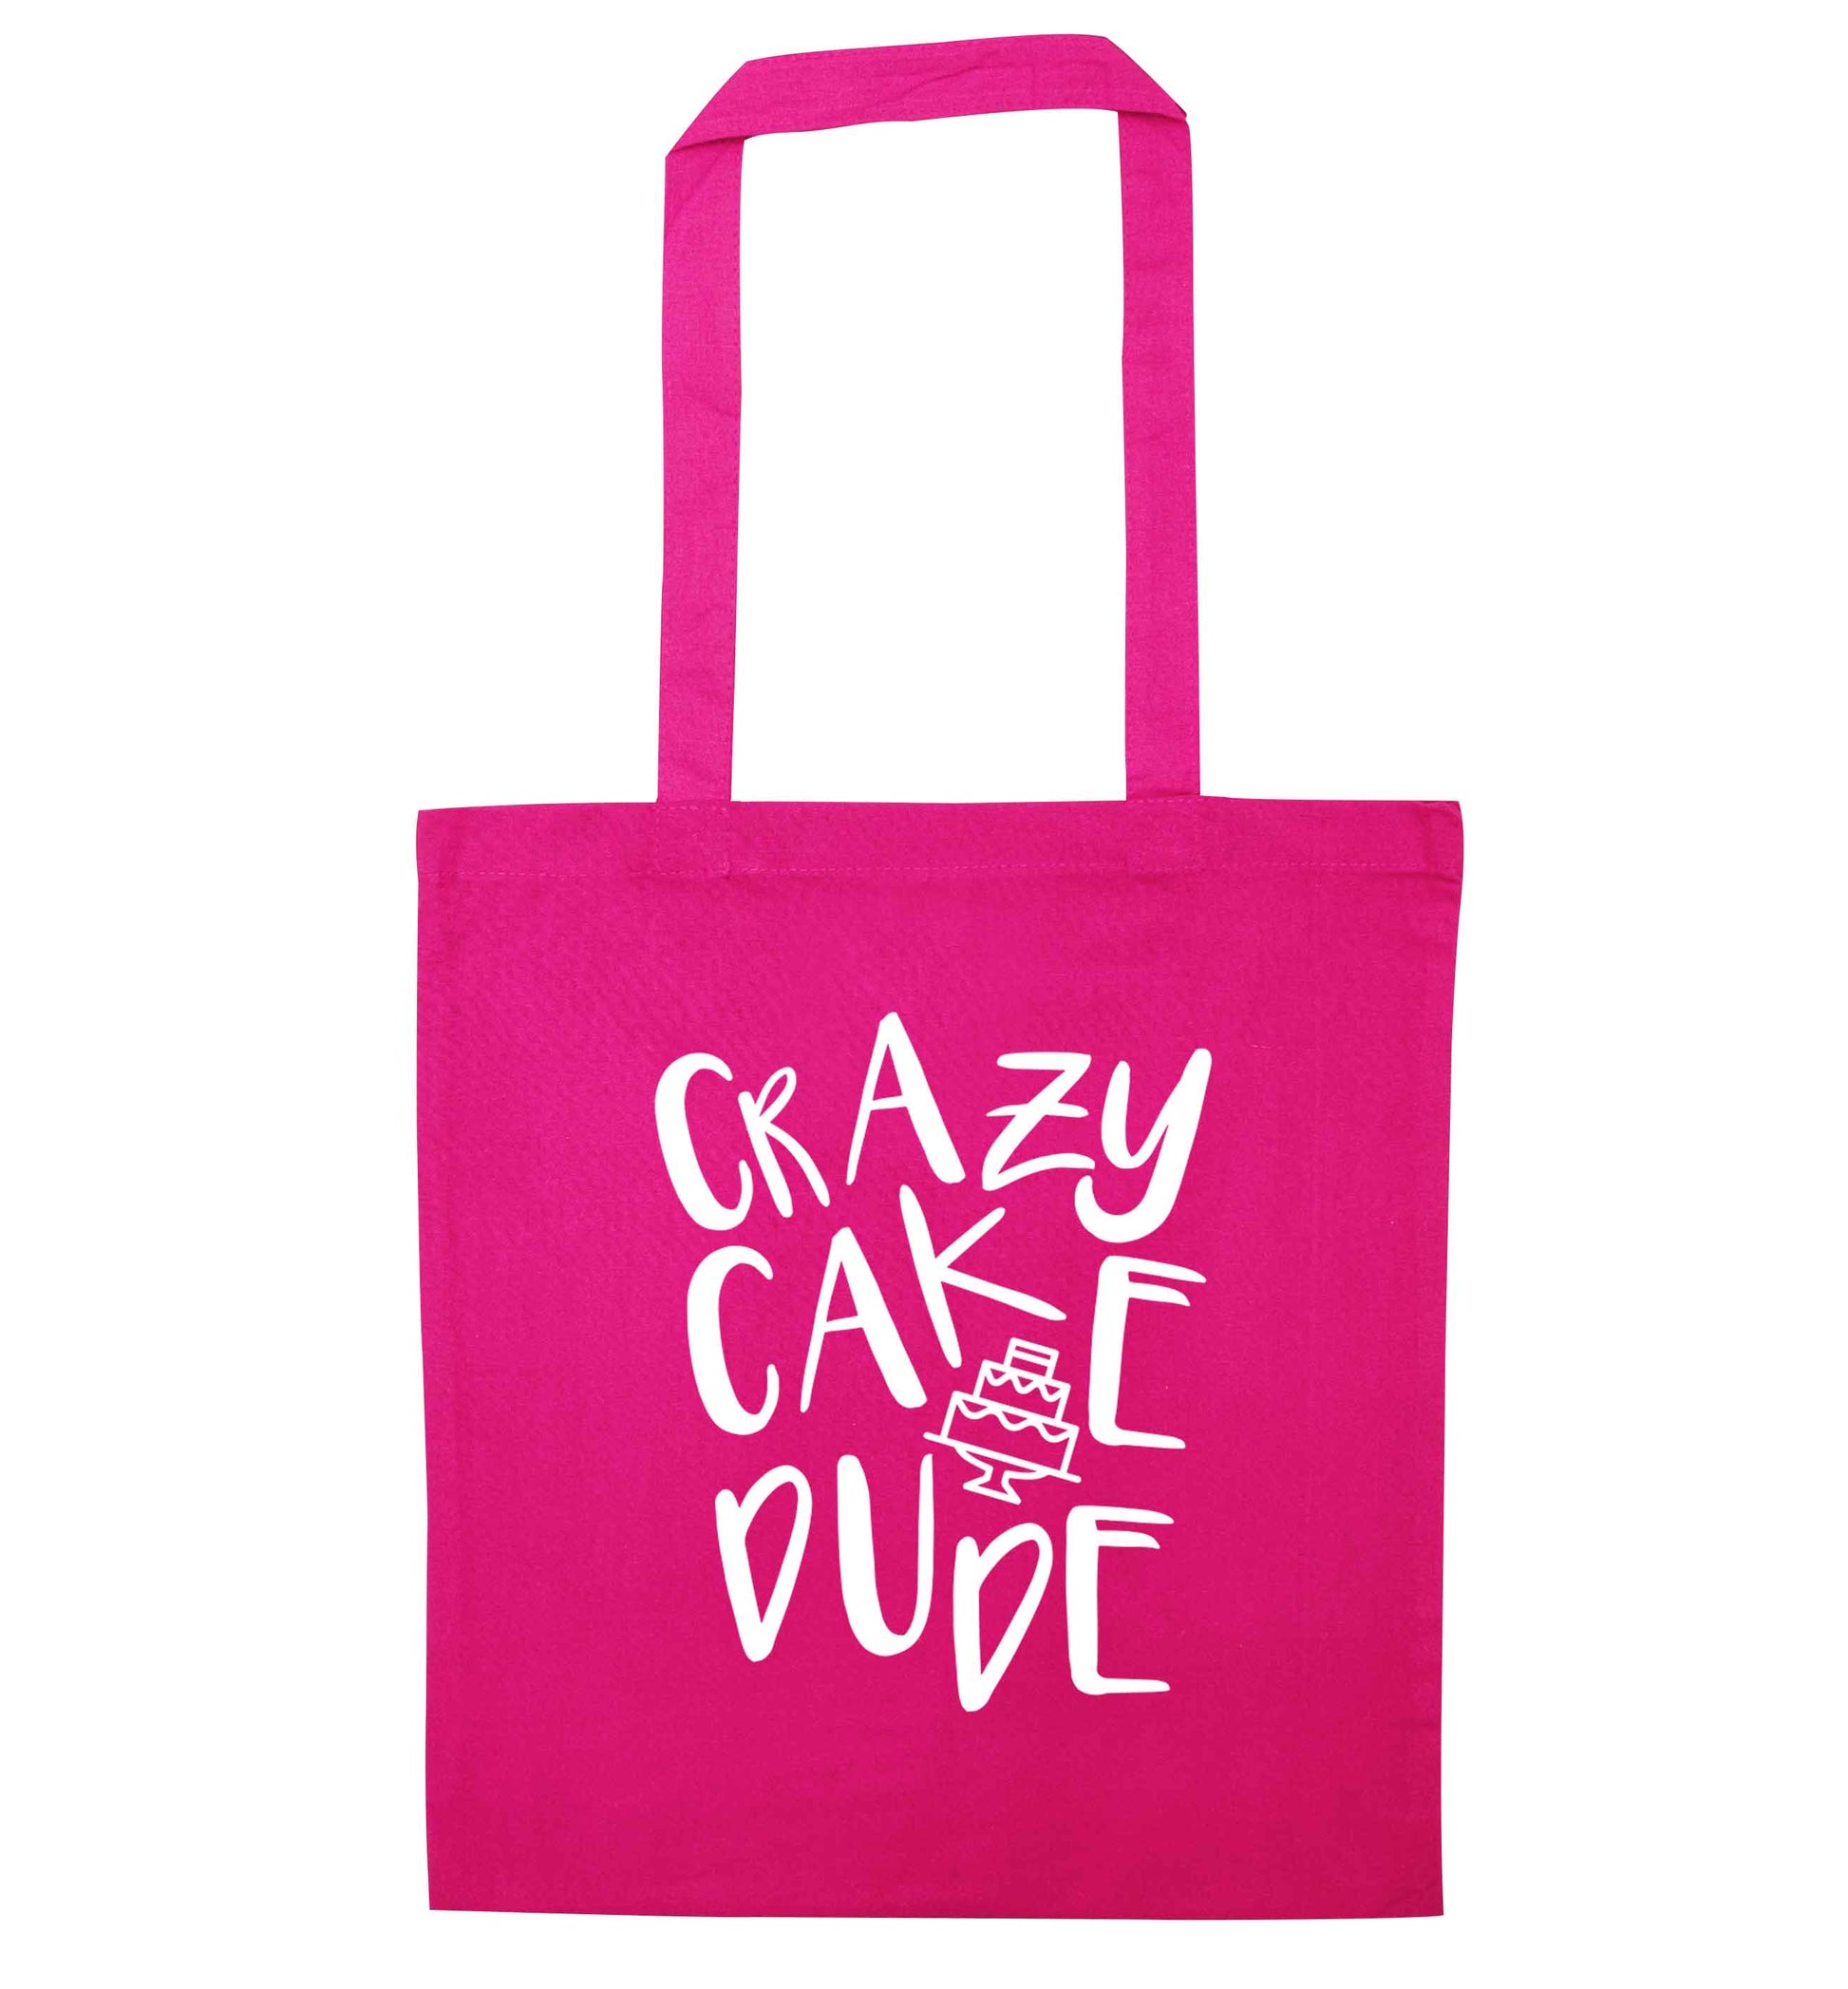 Crazy cake dude pink tote bag